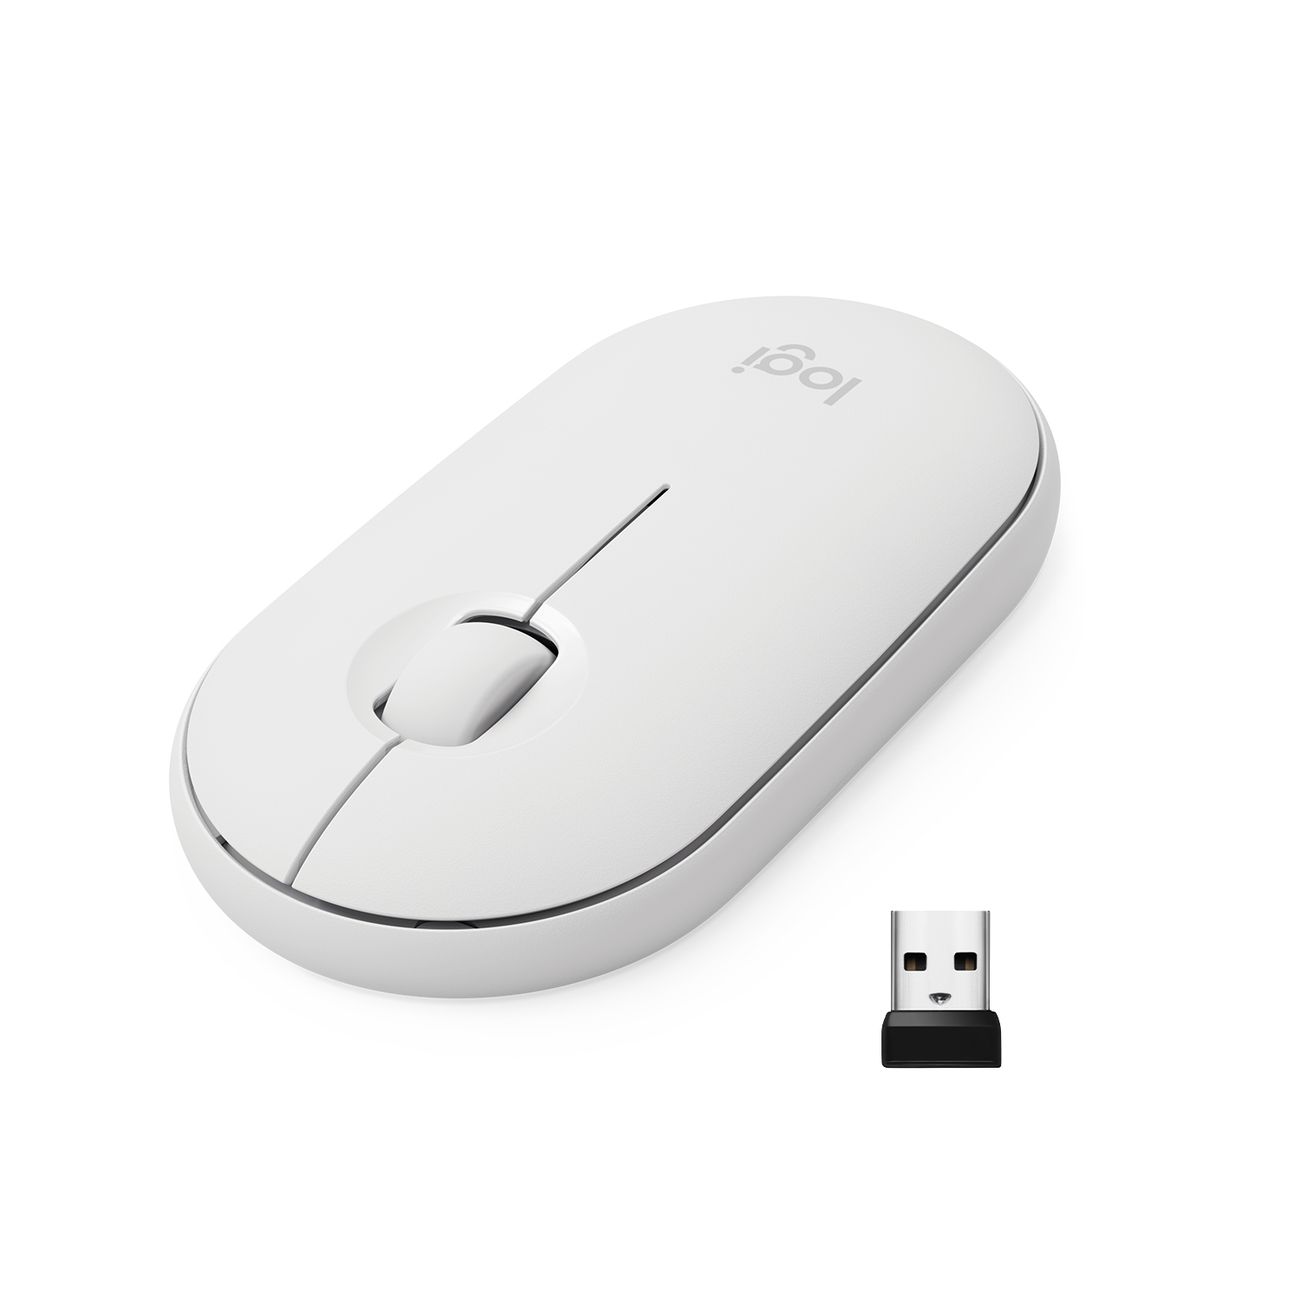 Мышь беспроводная Logitech M350 Pebble Mouse, white (910-005716) мышь беспроводная m350 pebble bluetooth pink